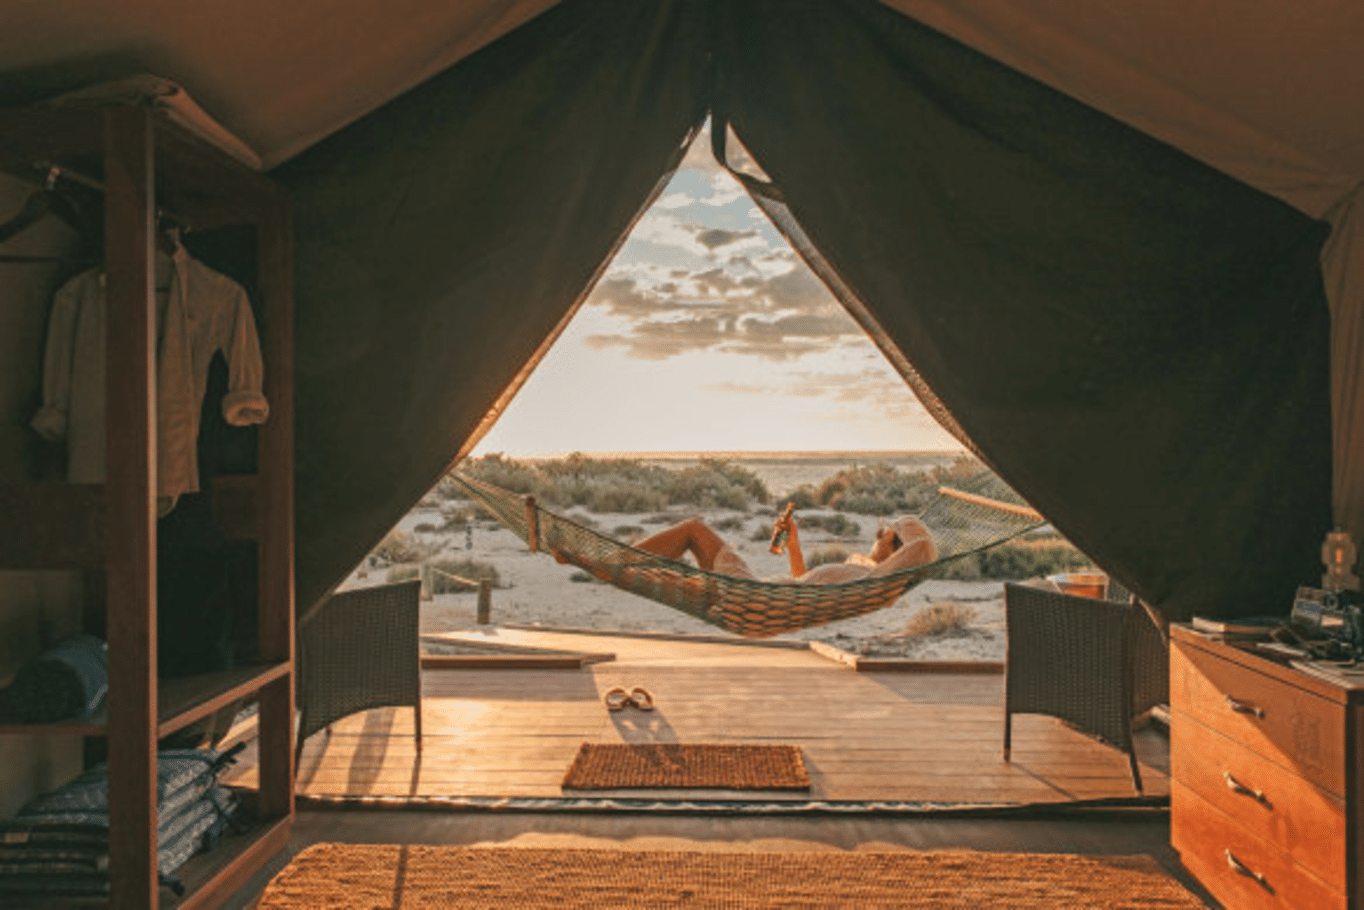 10 Luxurious Ways to Camp in Australia